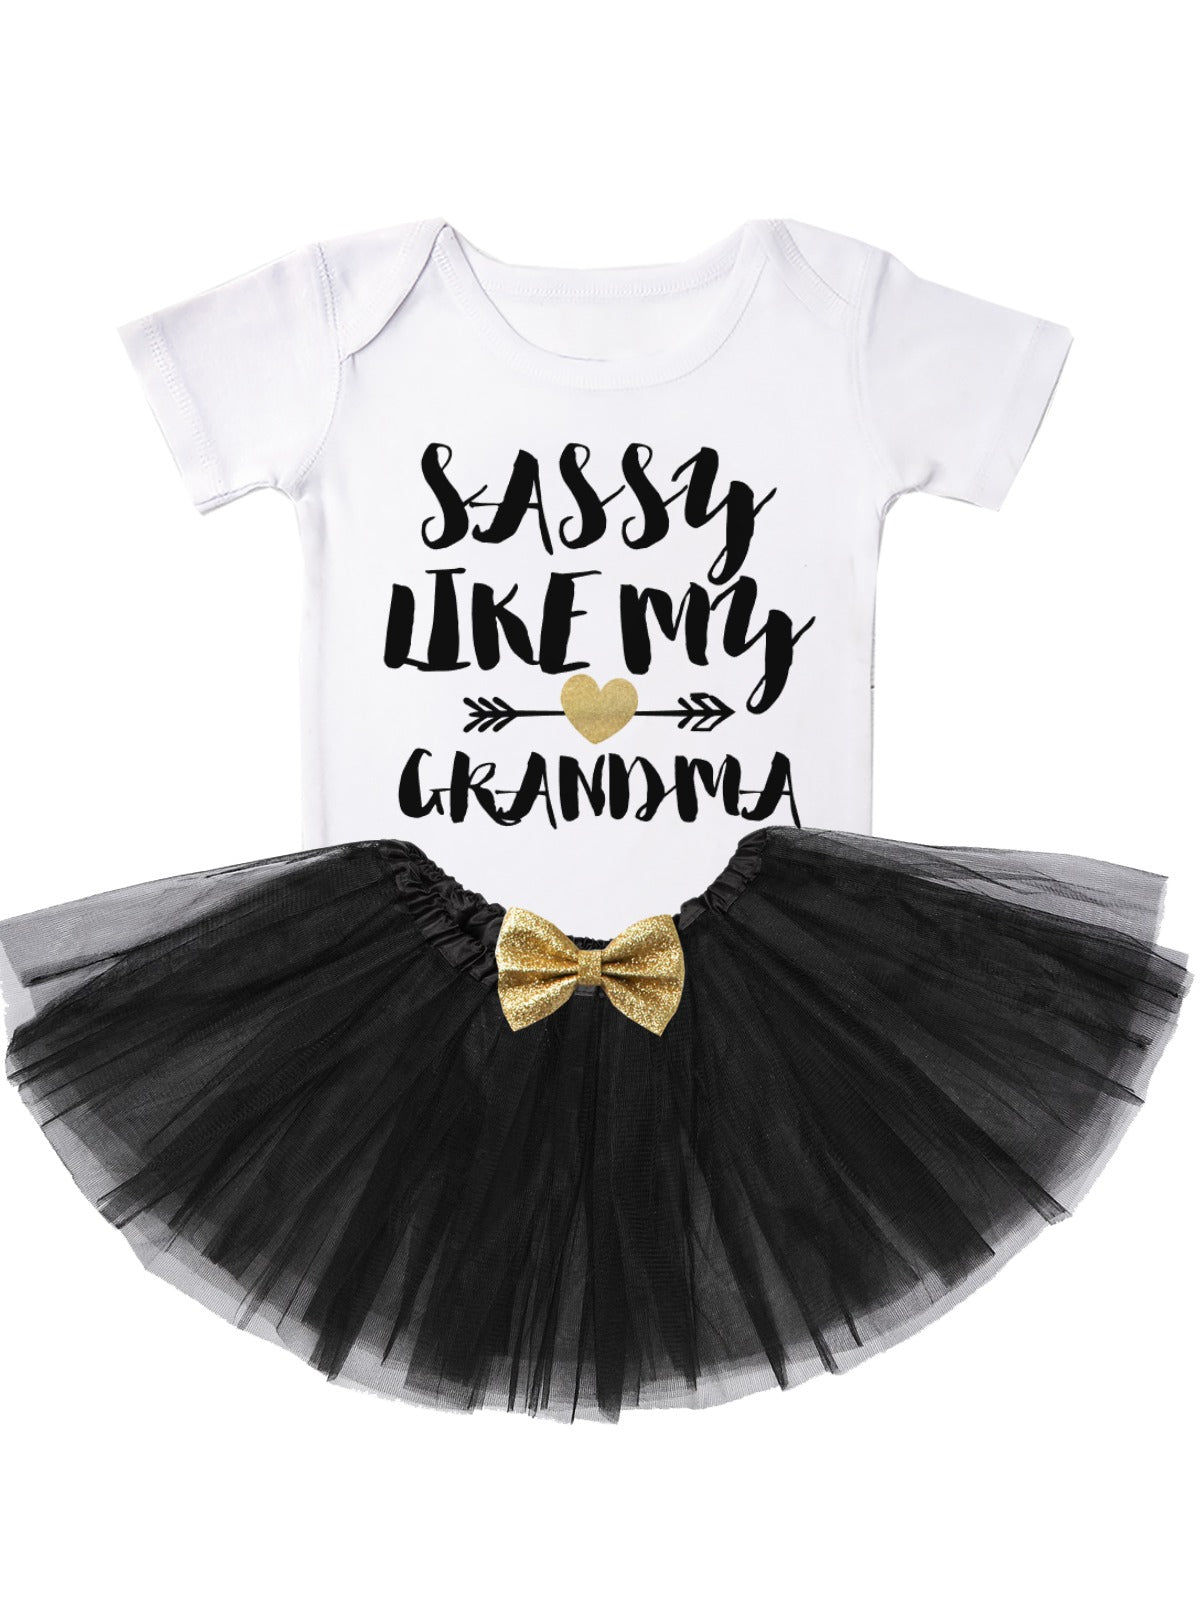 Sassy Like My Grandma Tutu Outfit